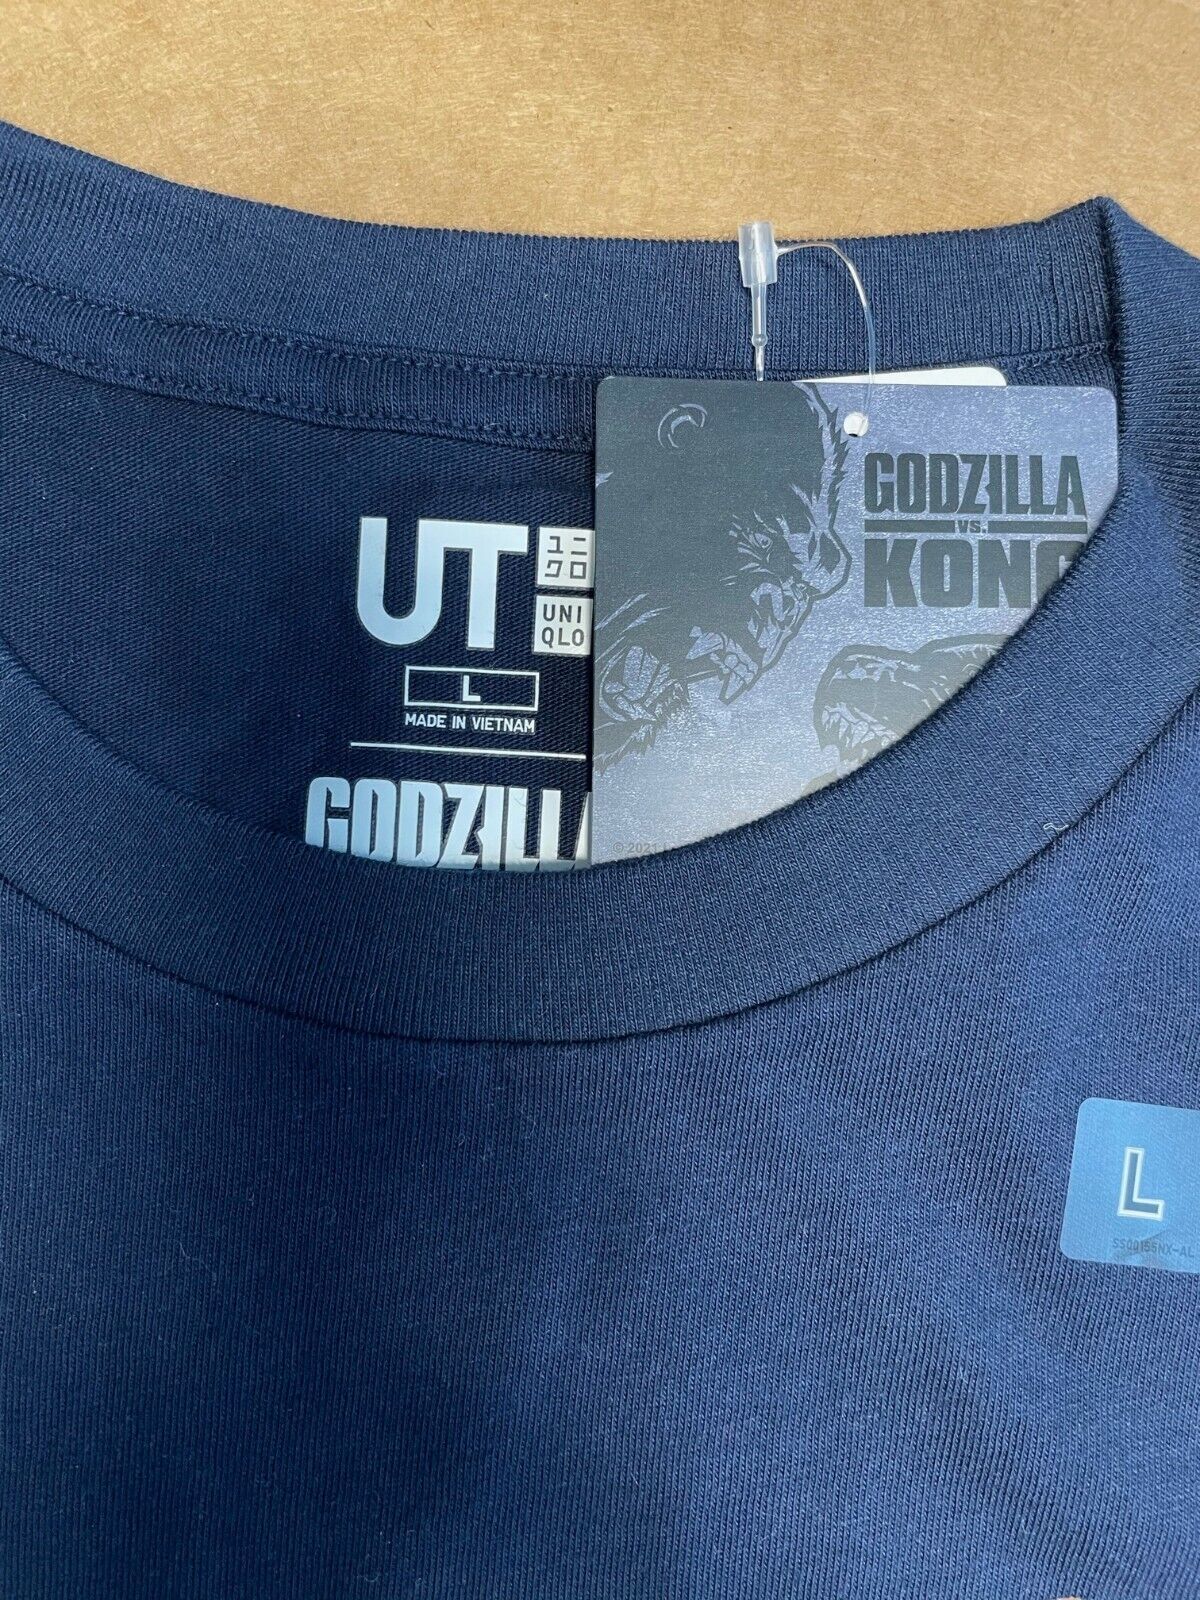 Uniqlo UNIQLO joint Godzilla vs King Kong KINGKONG vs GODZILLA printed  shortsleeved Tshirt  Lazada Singapore